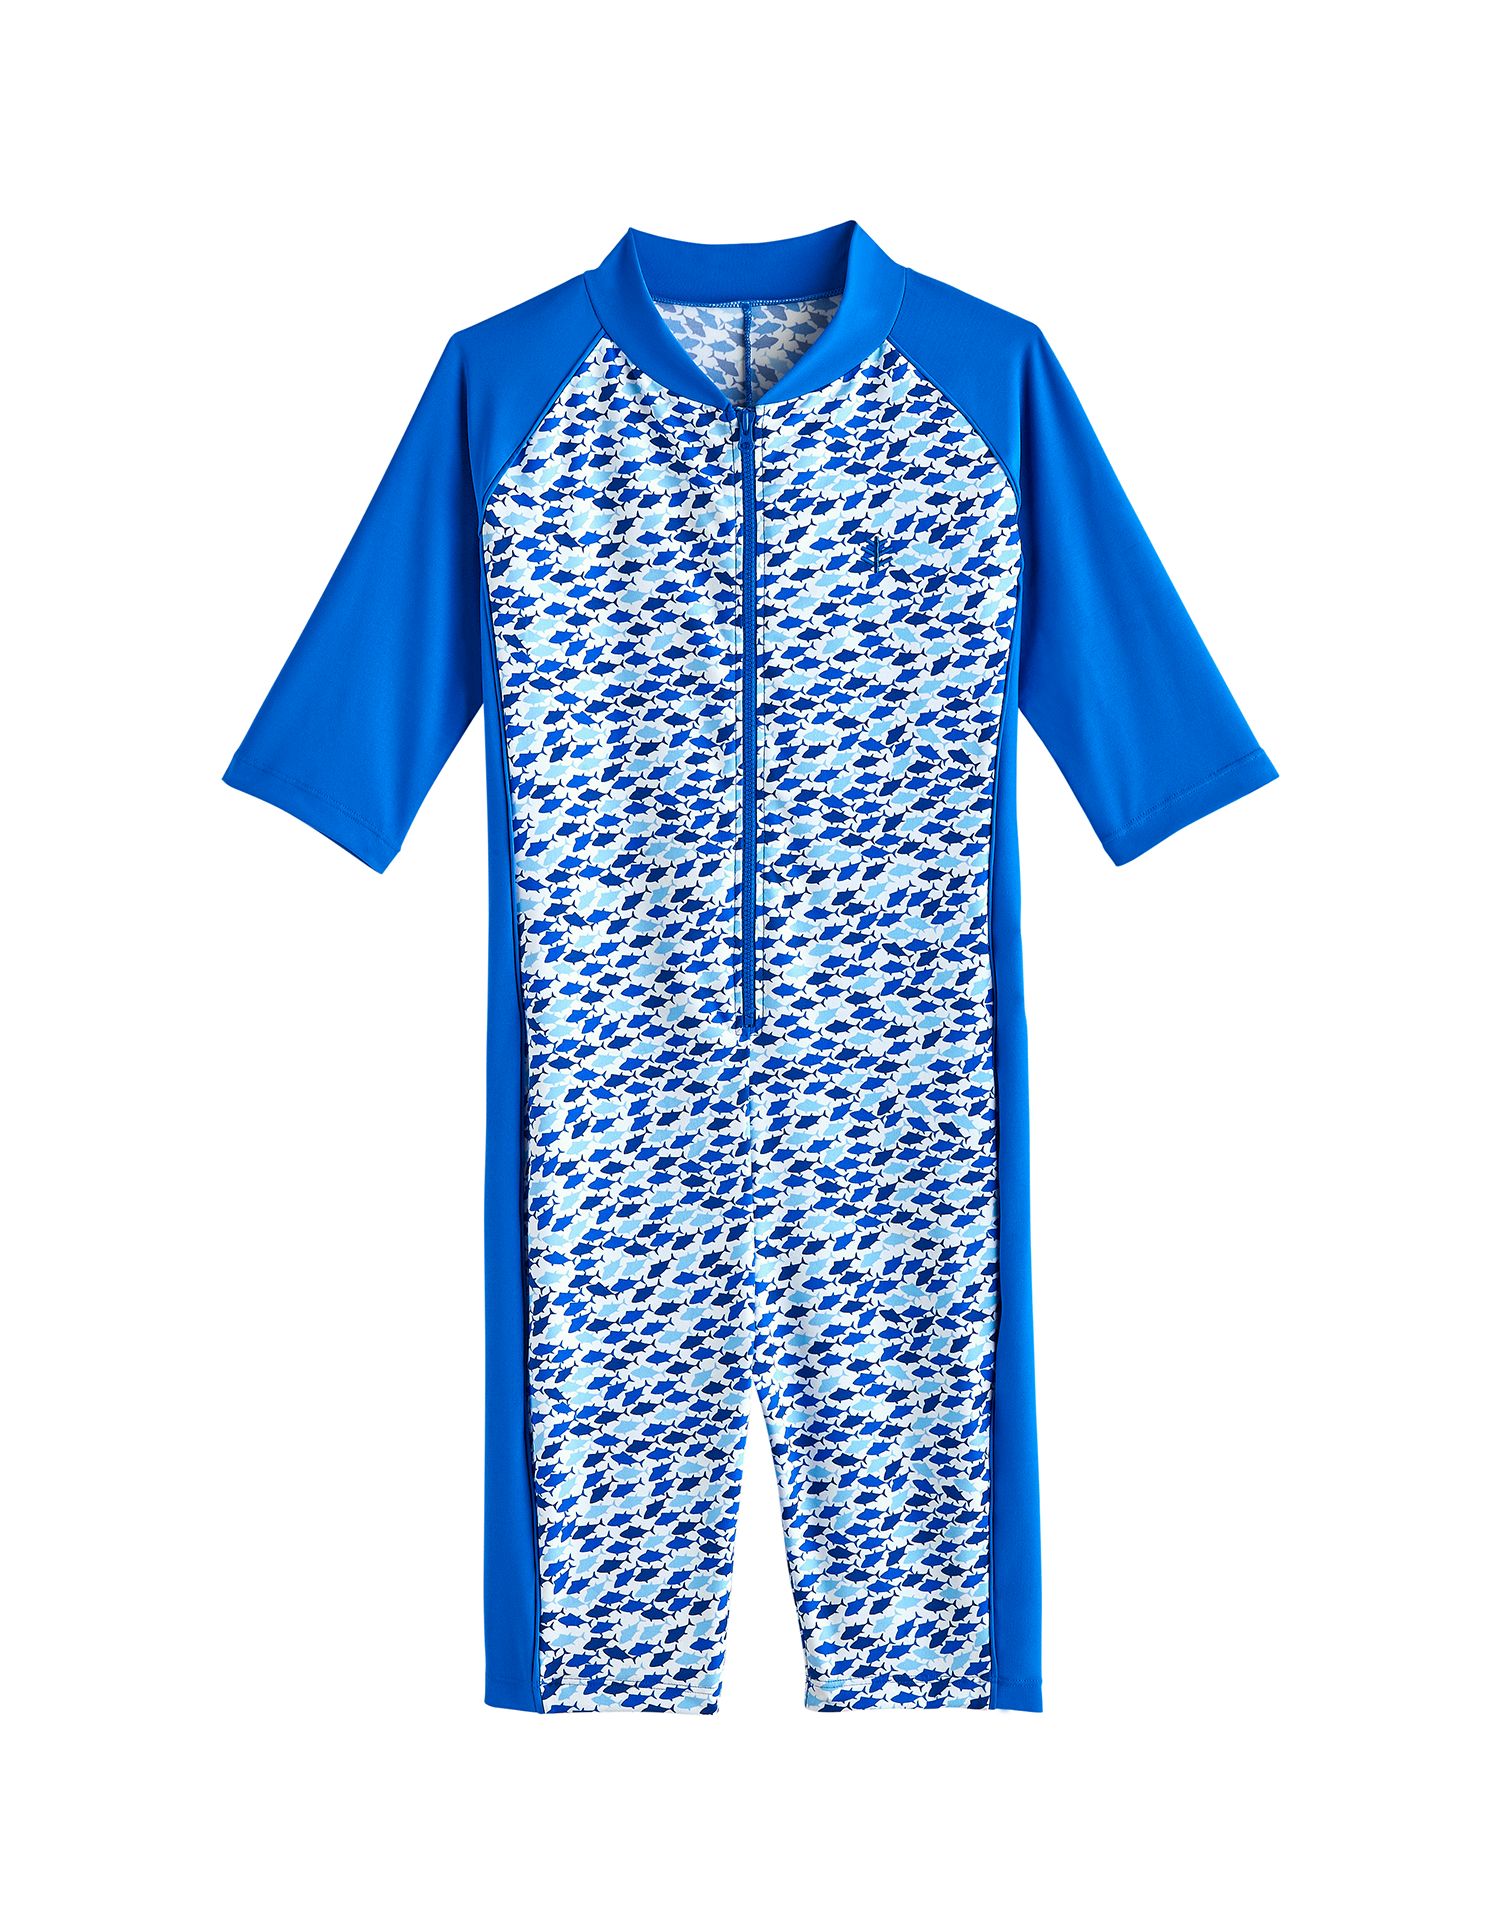 Coolibar - UV Swim suit for boys - Barracuda Neck-to-Knee - Marlin Blue